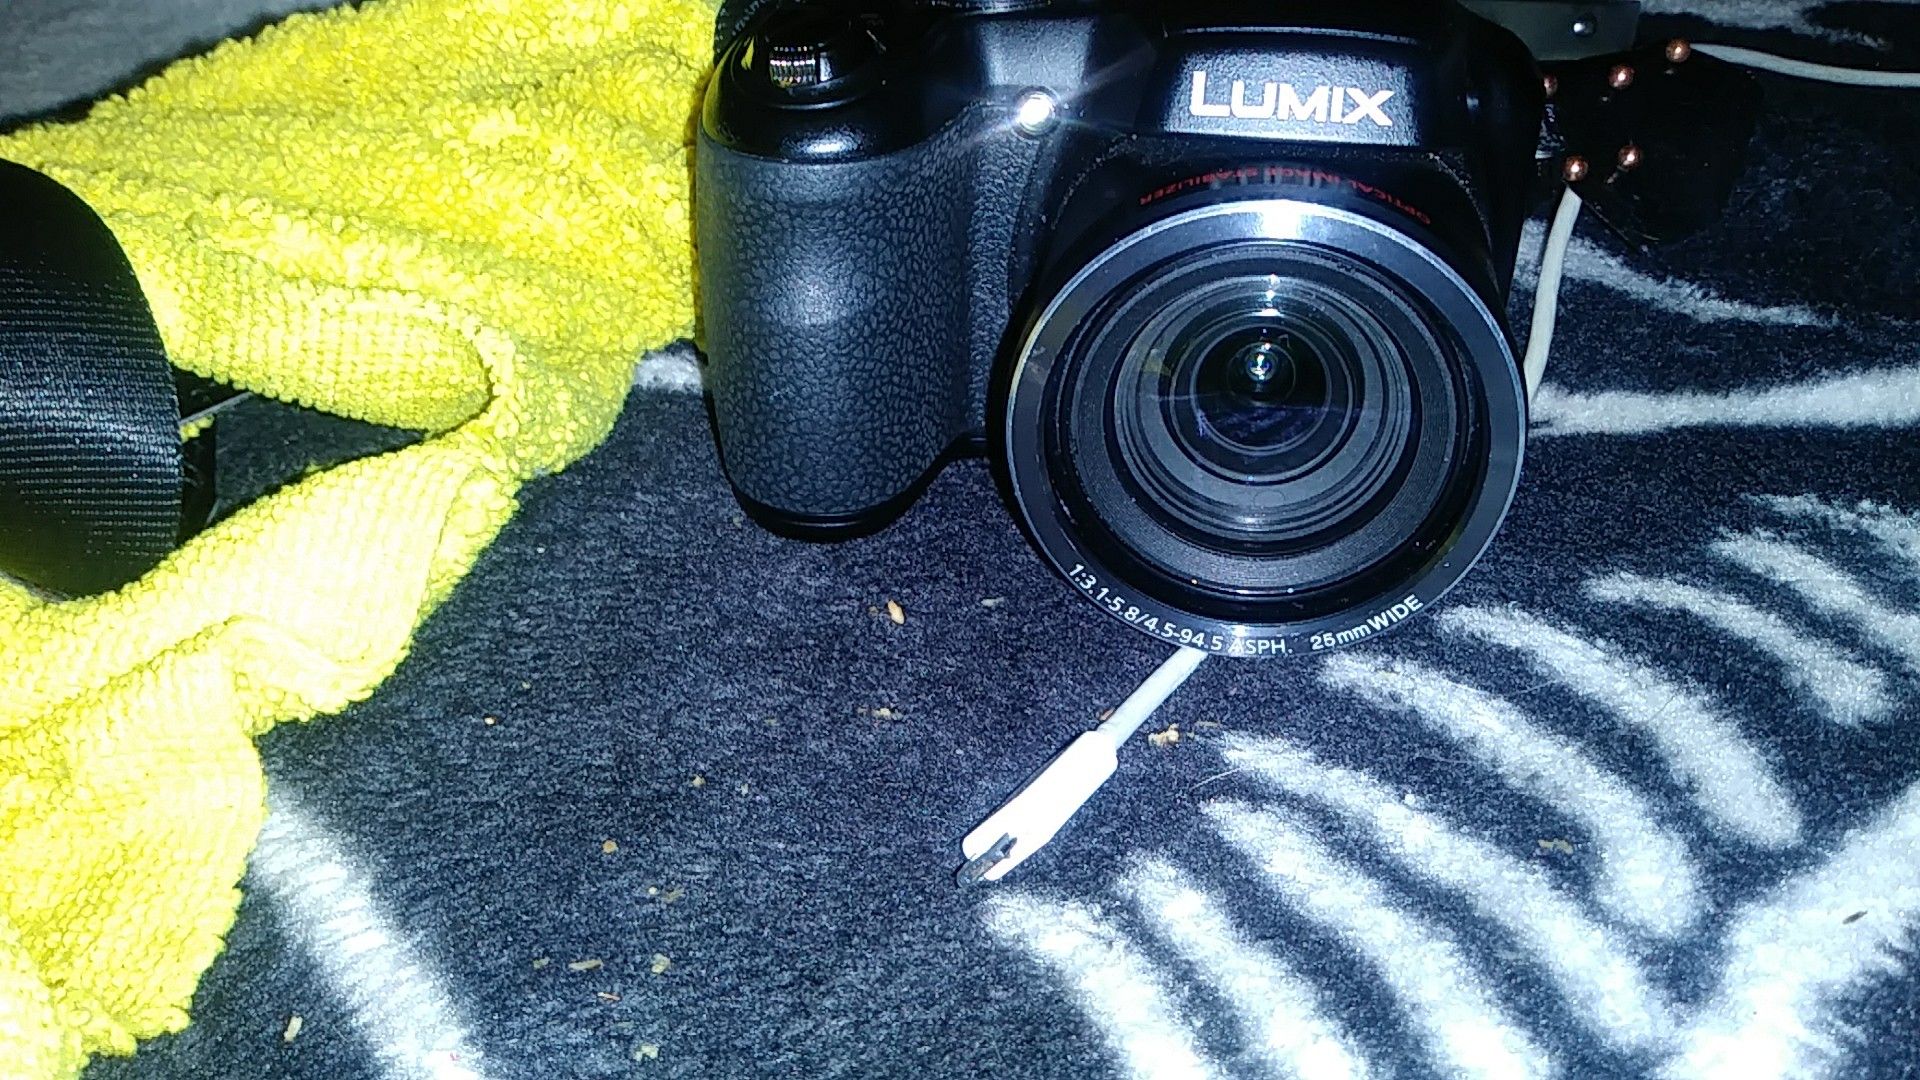 Panadonic lumix digital camera